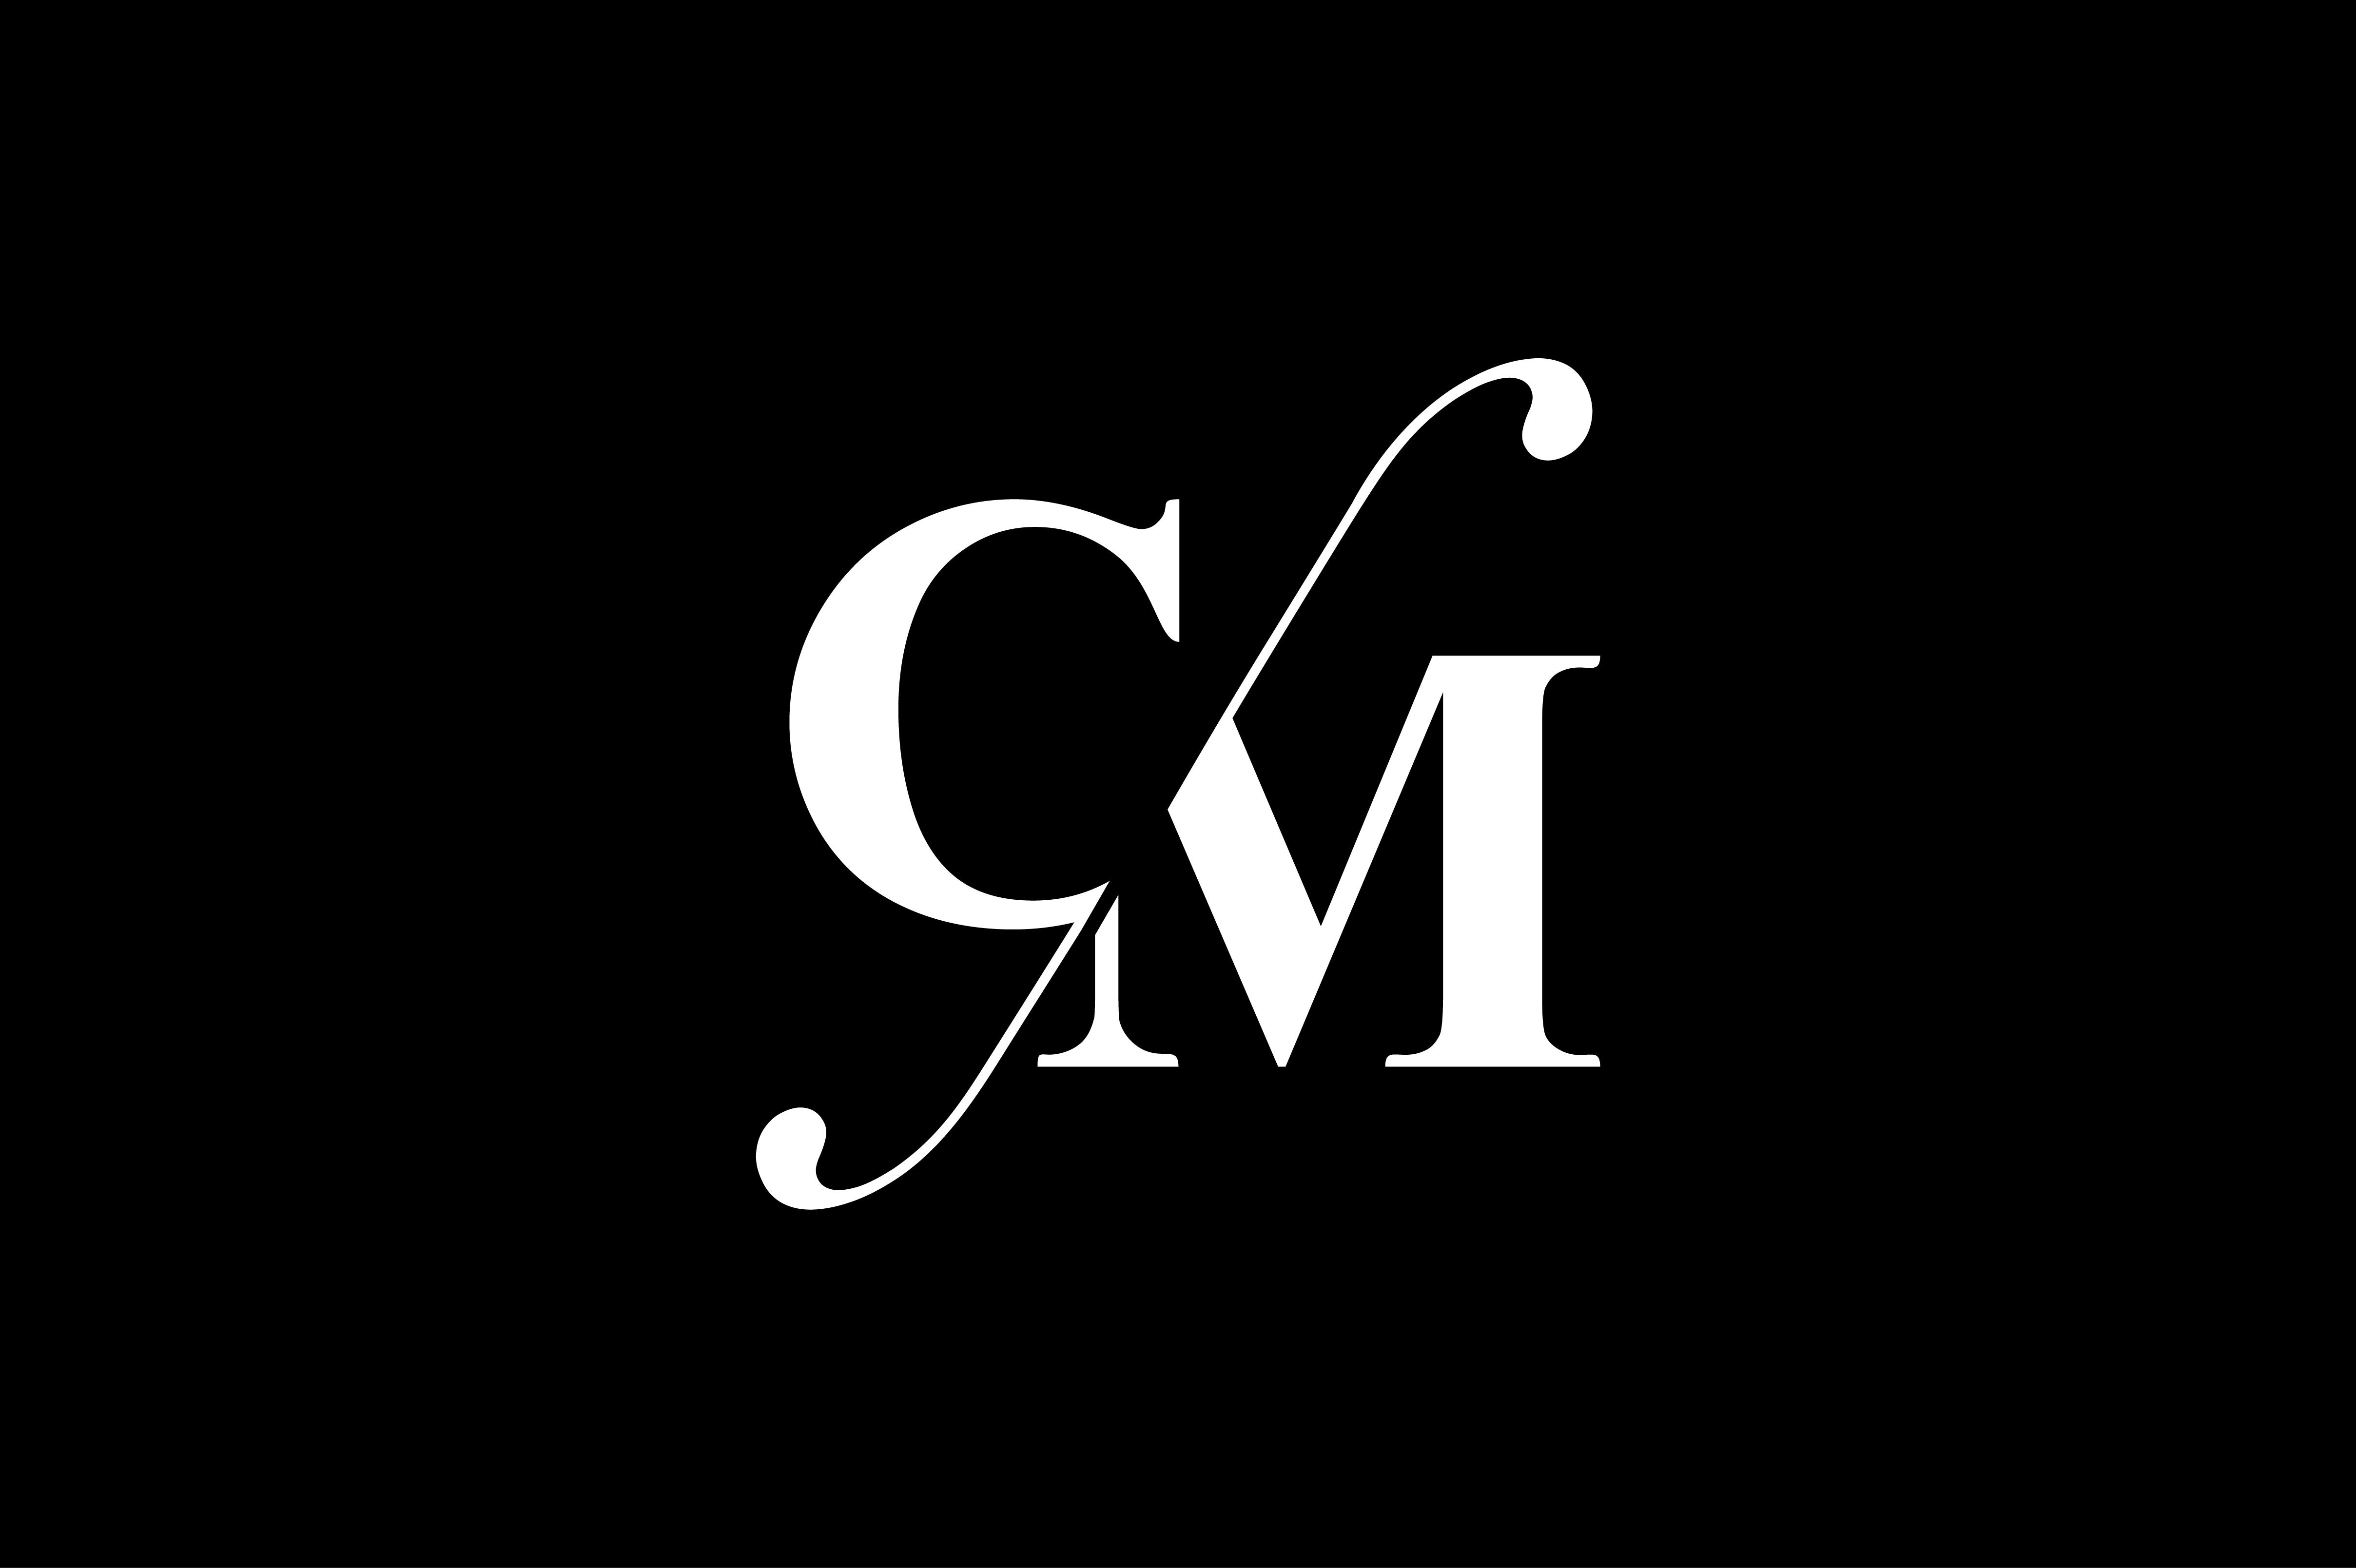 Cm Monogram Logo Design By Vectorseller Thehungryjpeg Com